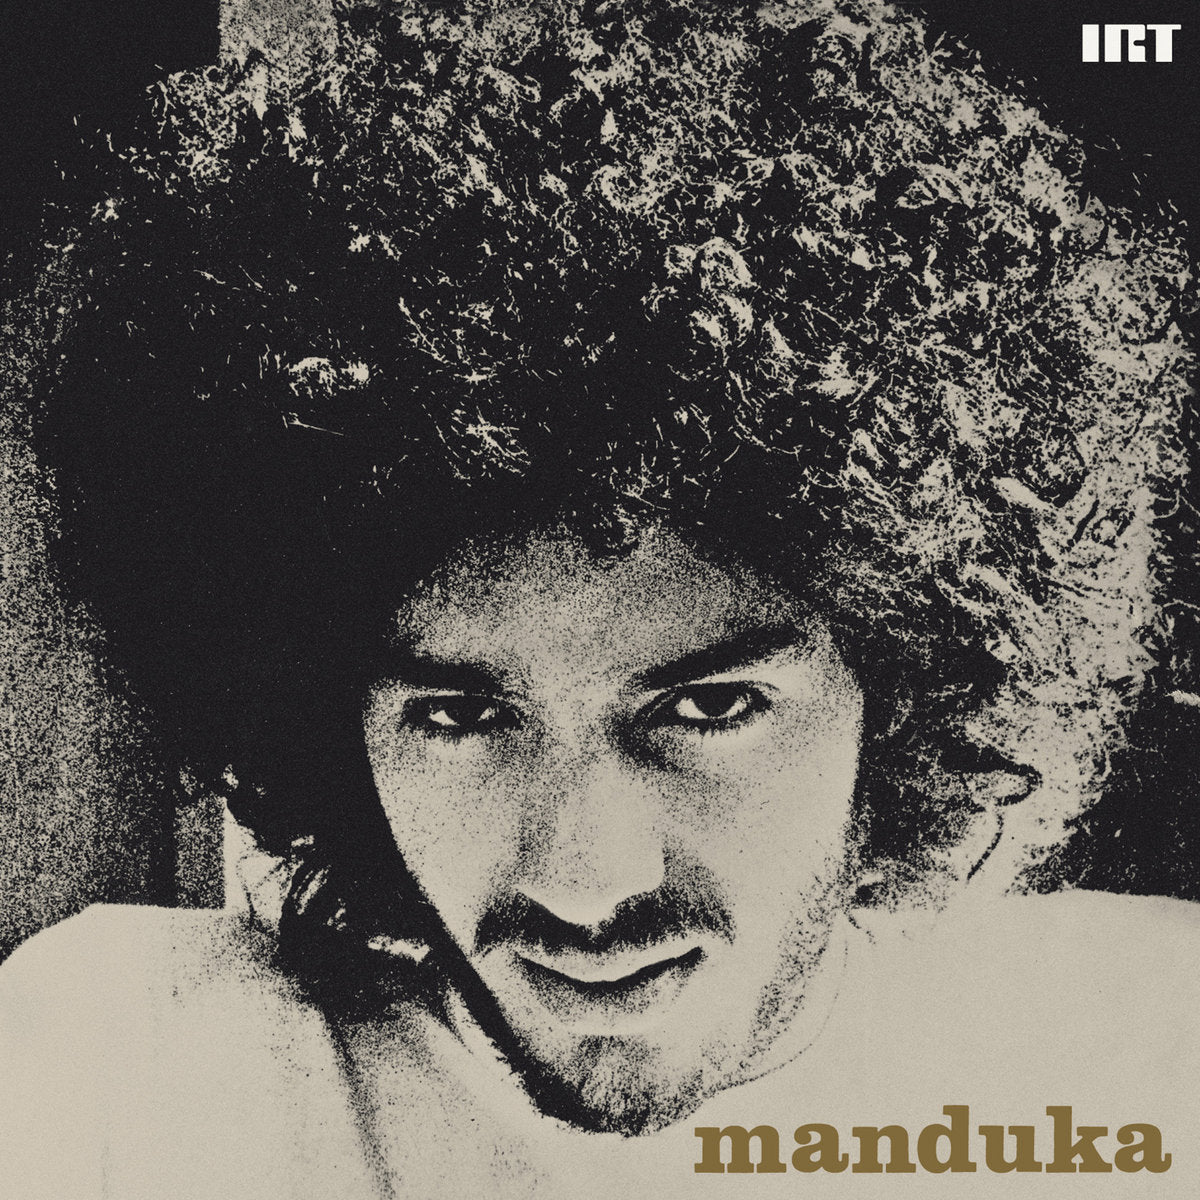 Manduka (New LP)